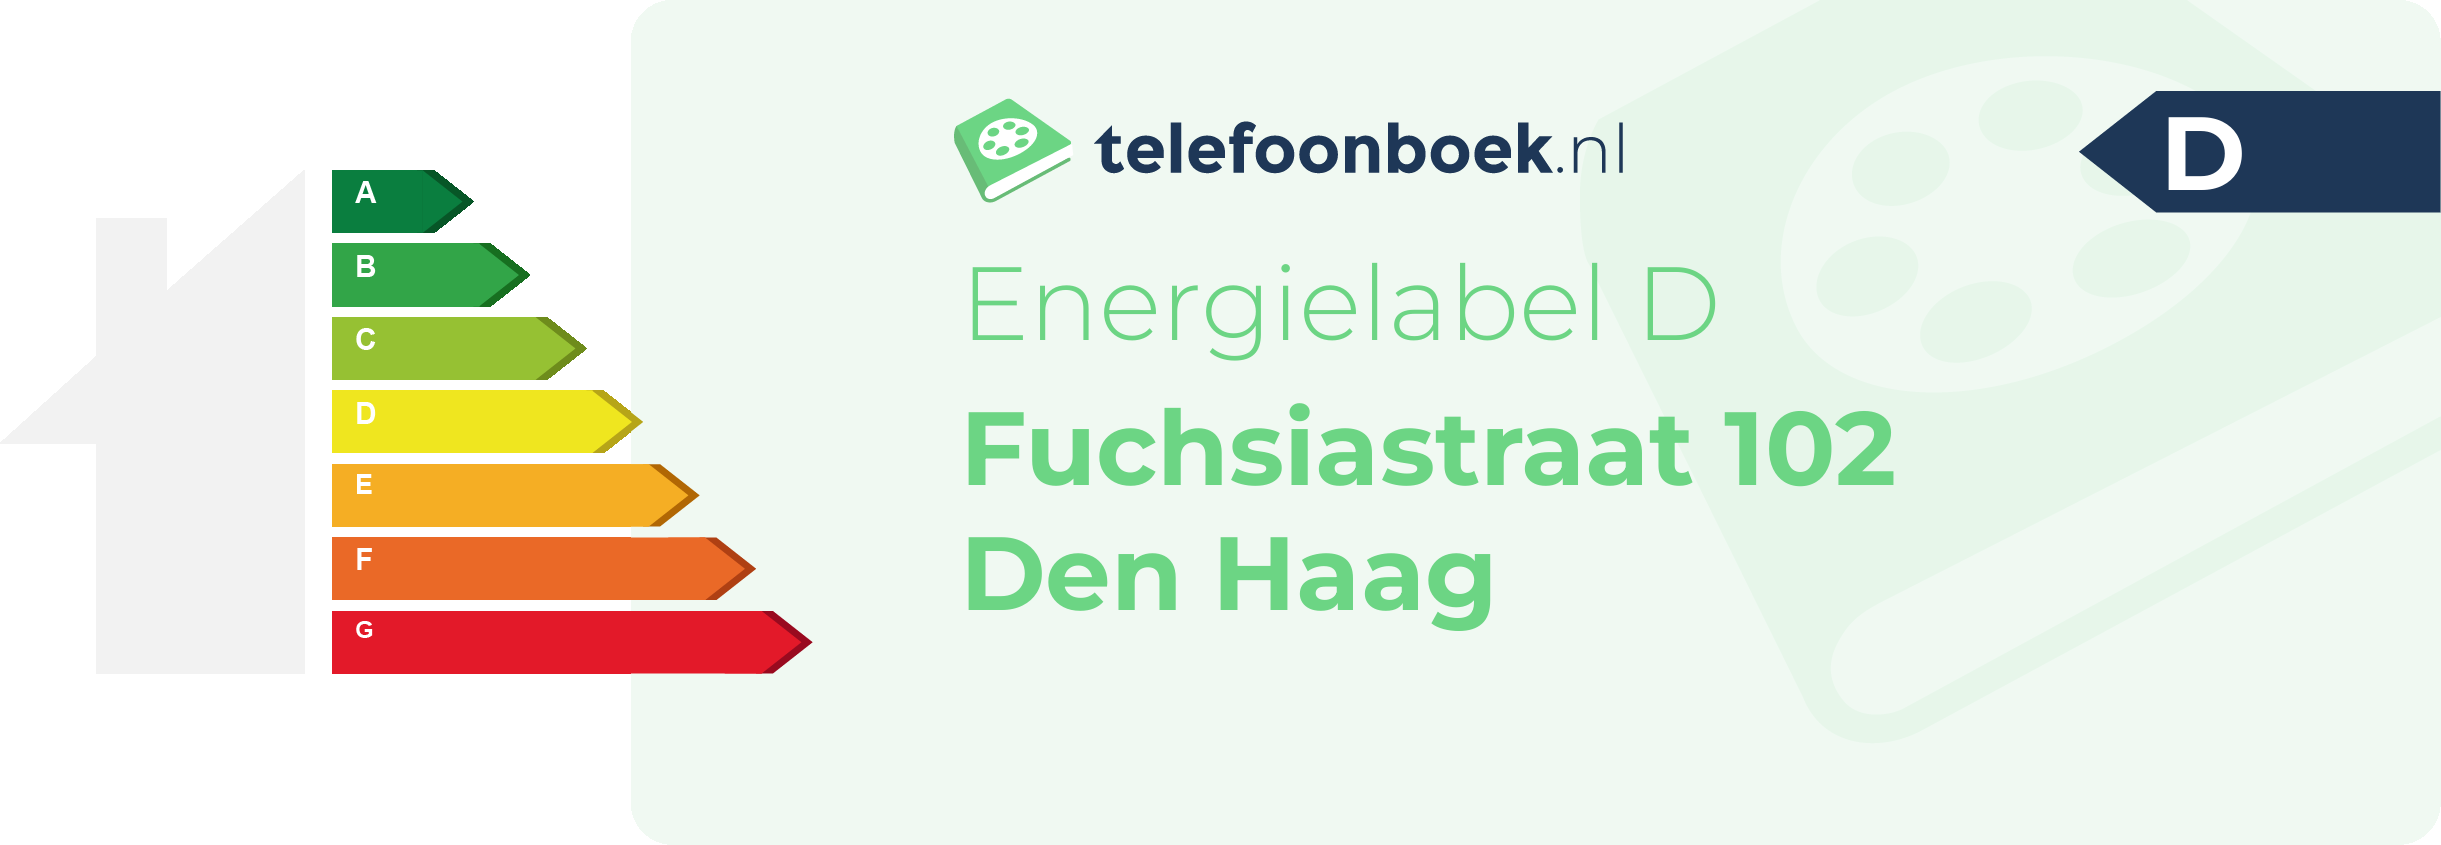 Energielabel Fuchsiastraat 102 Den Haag